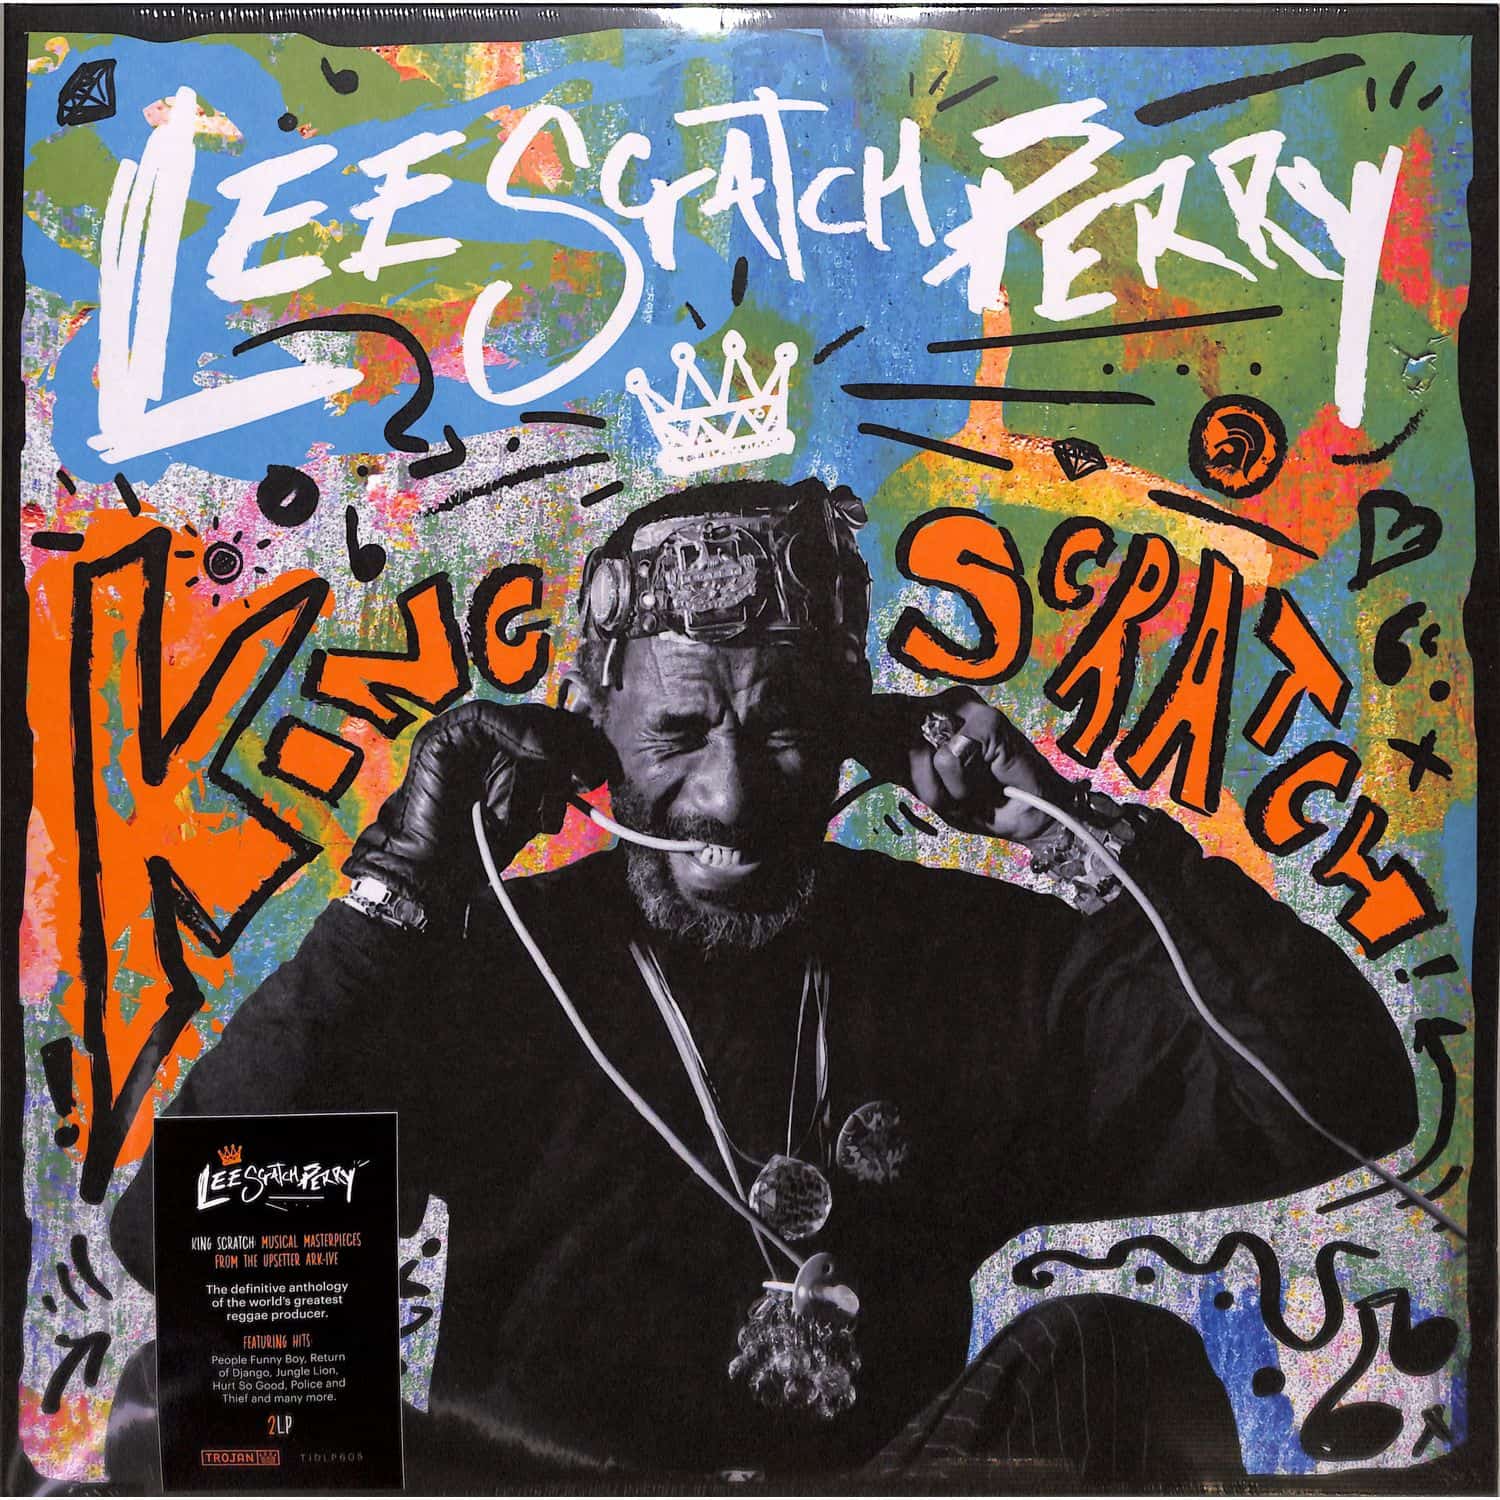 Lee Scratch Perry - KING SCRATCH 